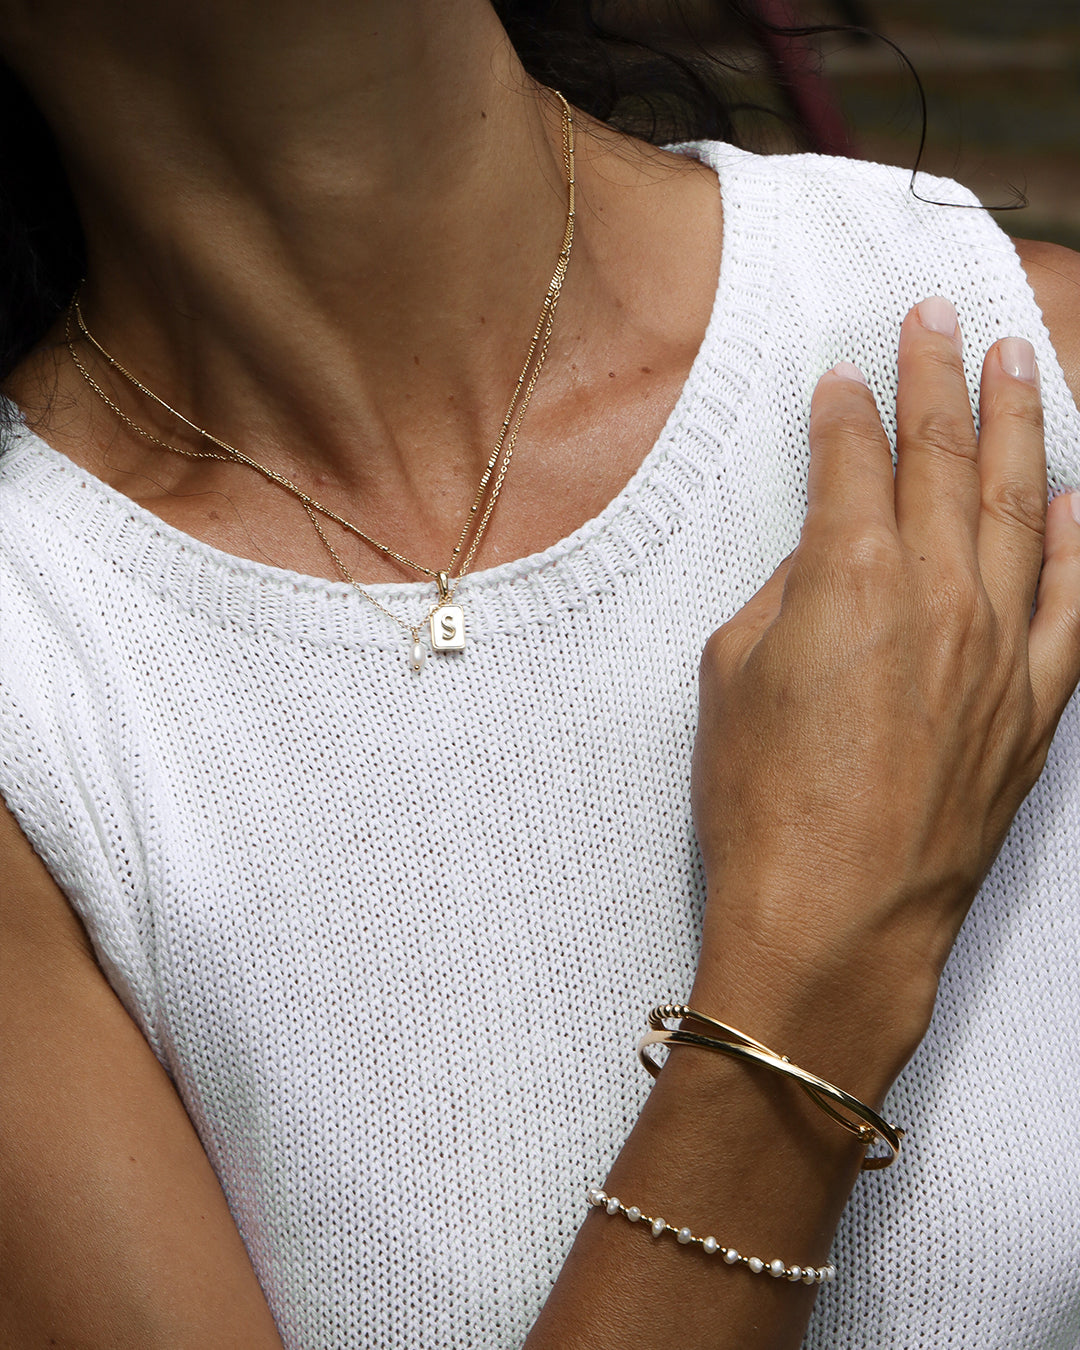 Mum Mini Pearl Necklace | Gold